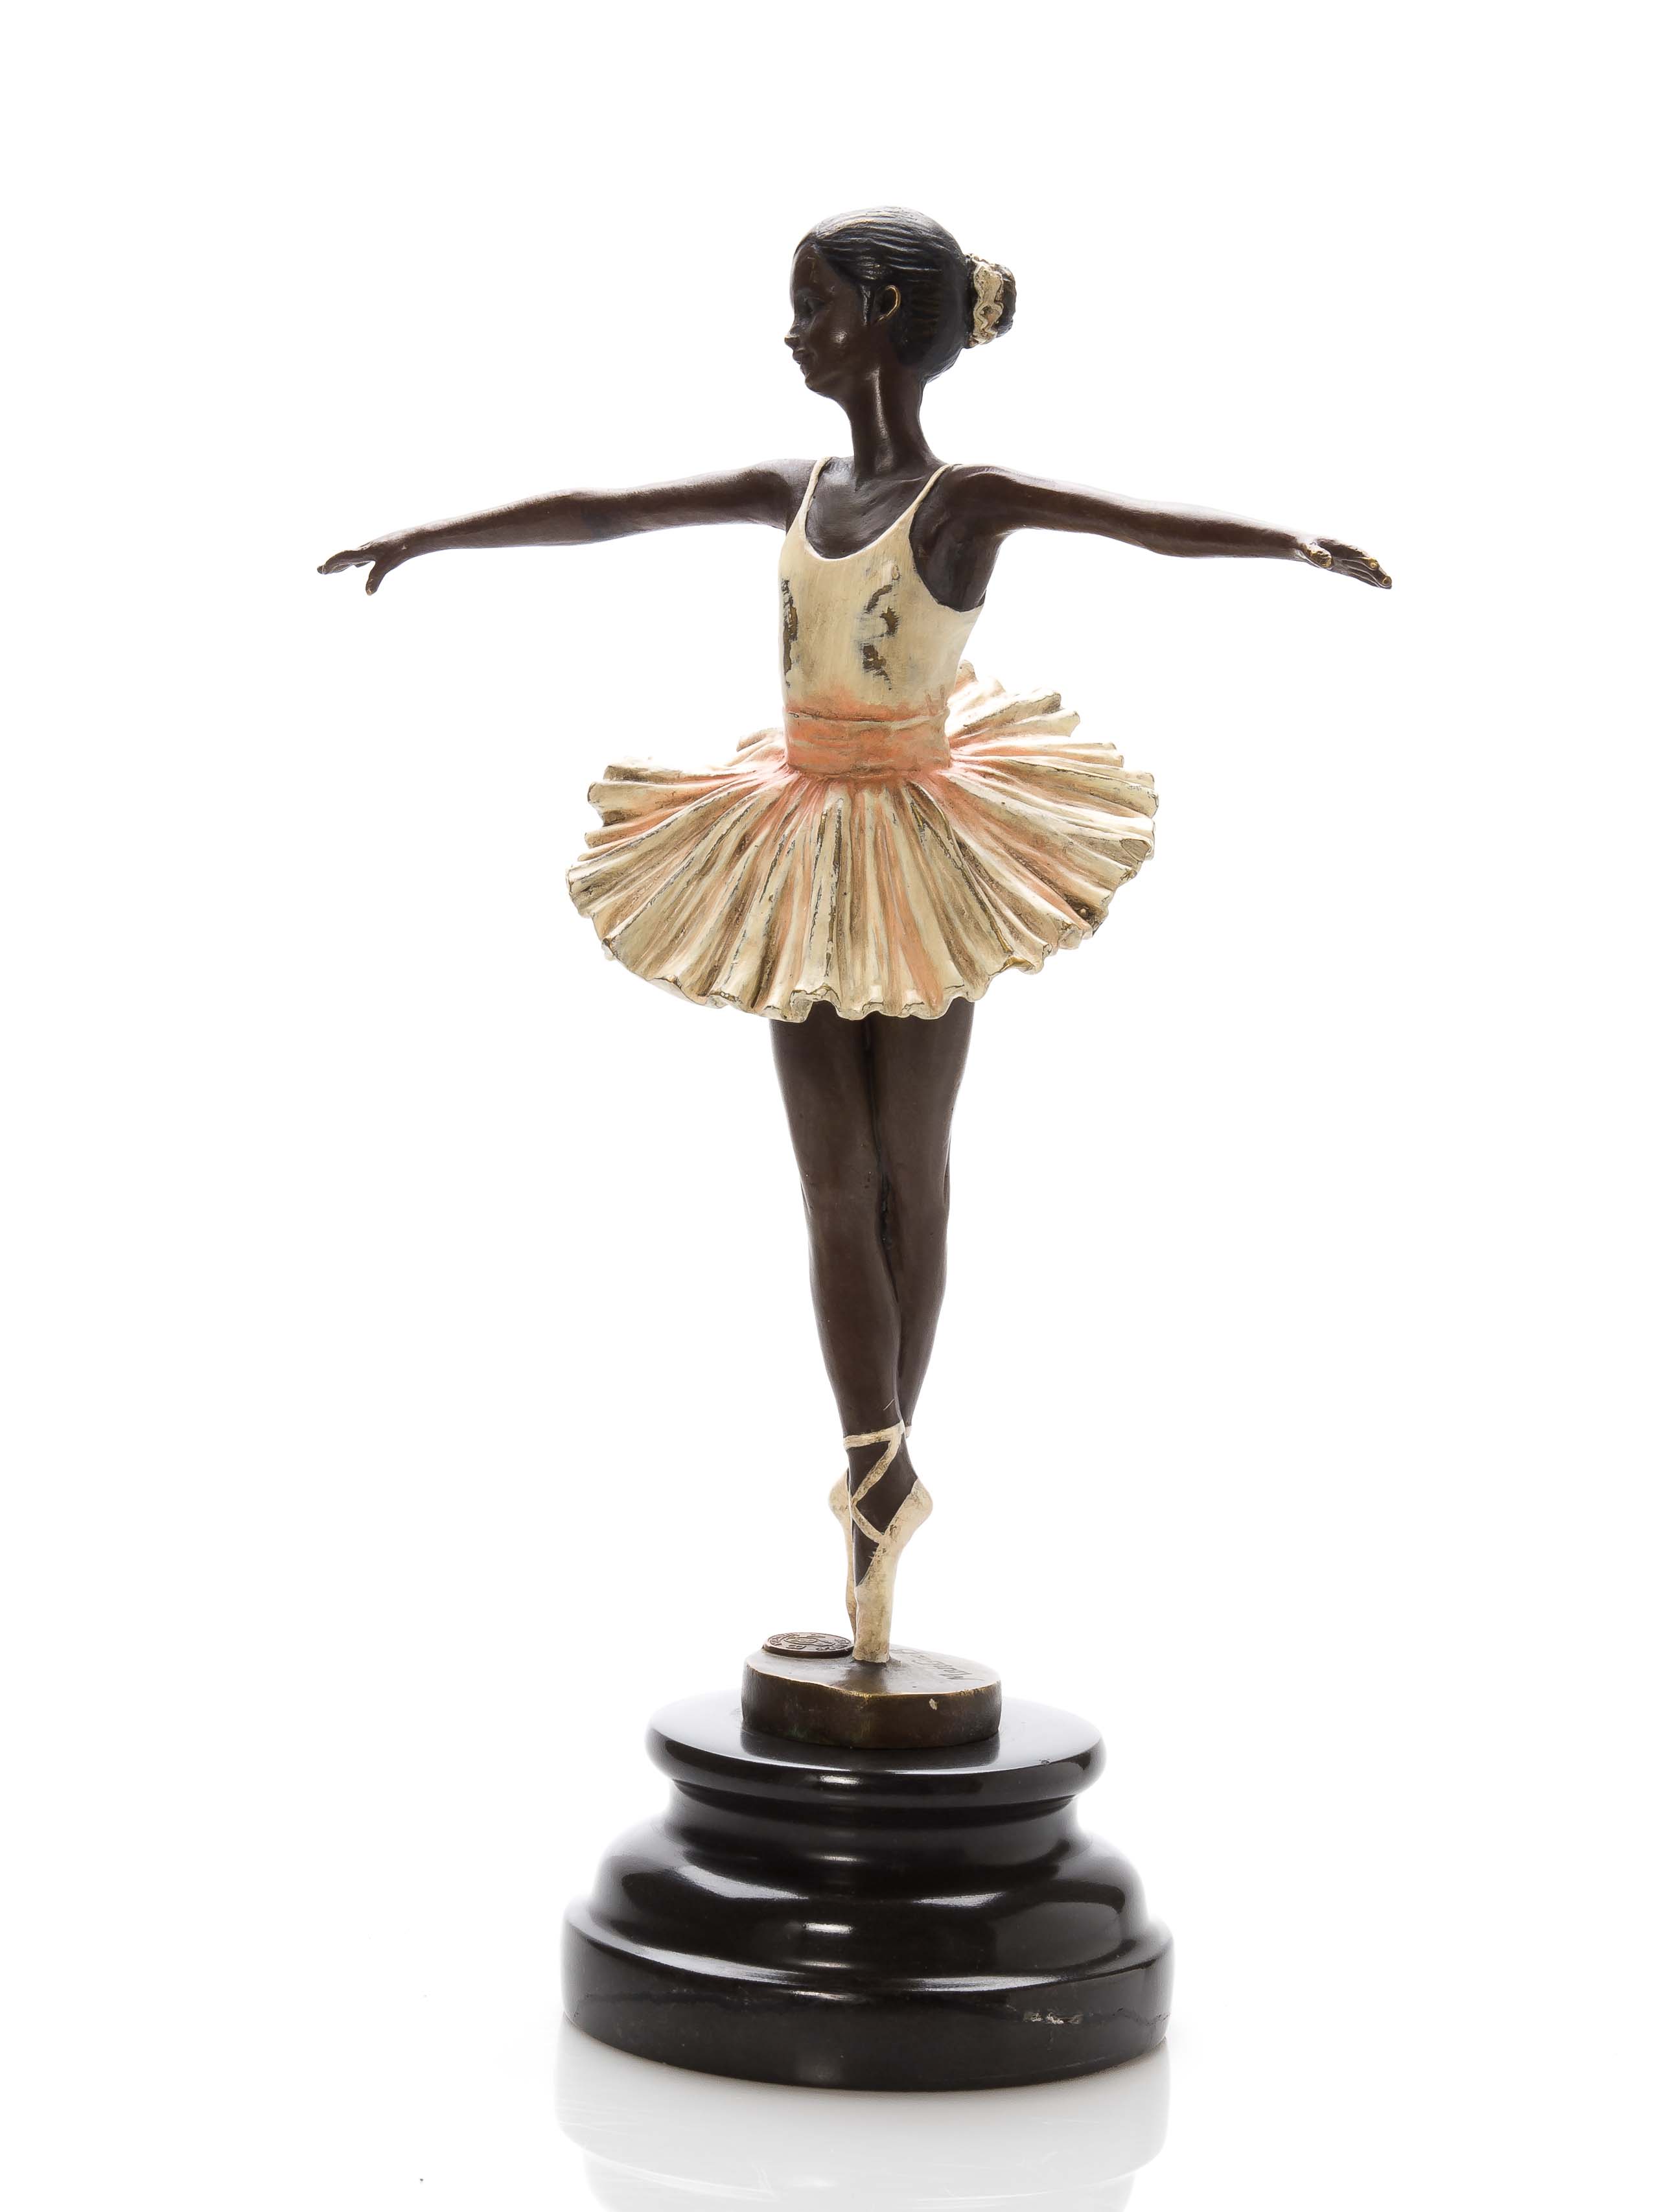 universitetsområde Mangle bacon Bronze Skulptur Ballett Tänzerin Ballerina dancer Antik-Stil sculpture  figure | aubaho ®